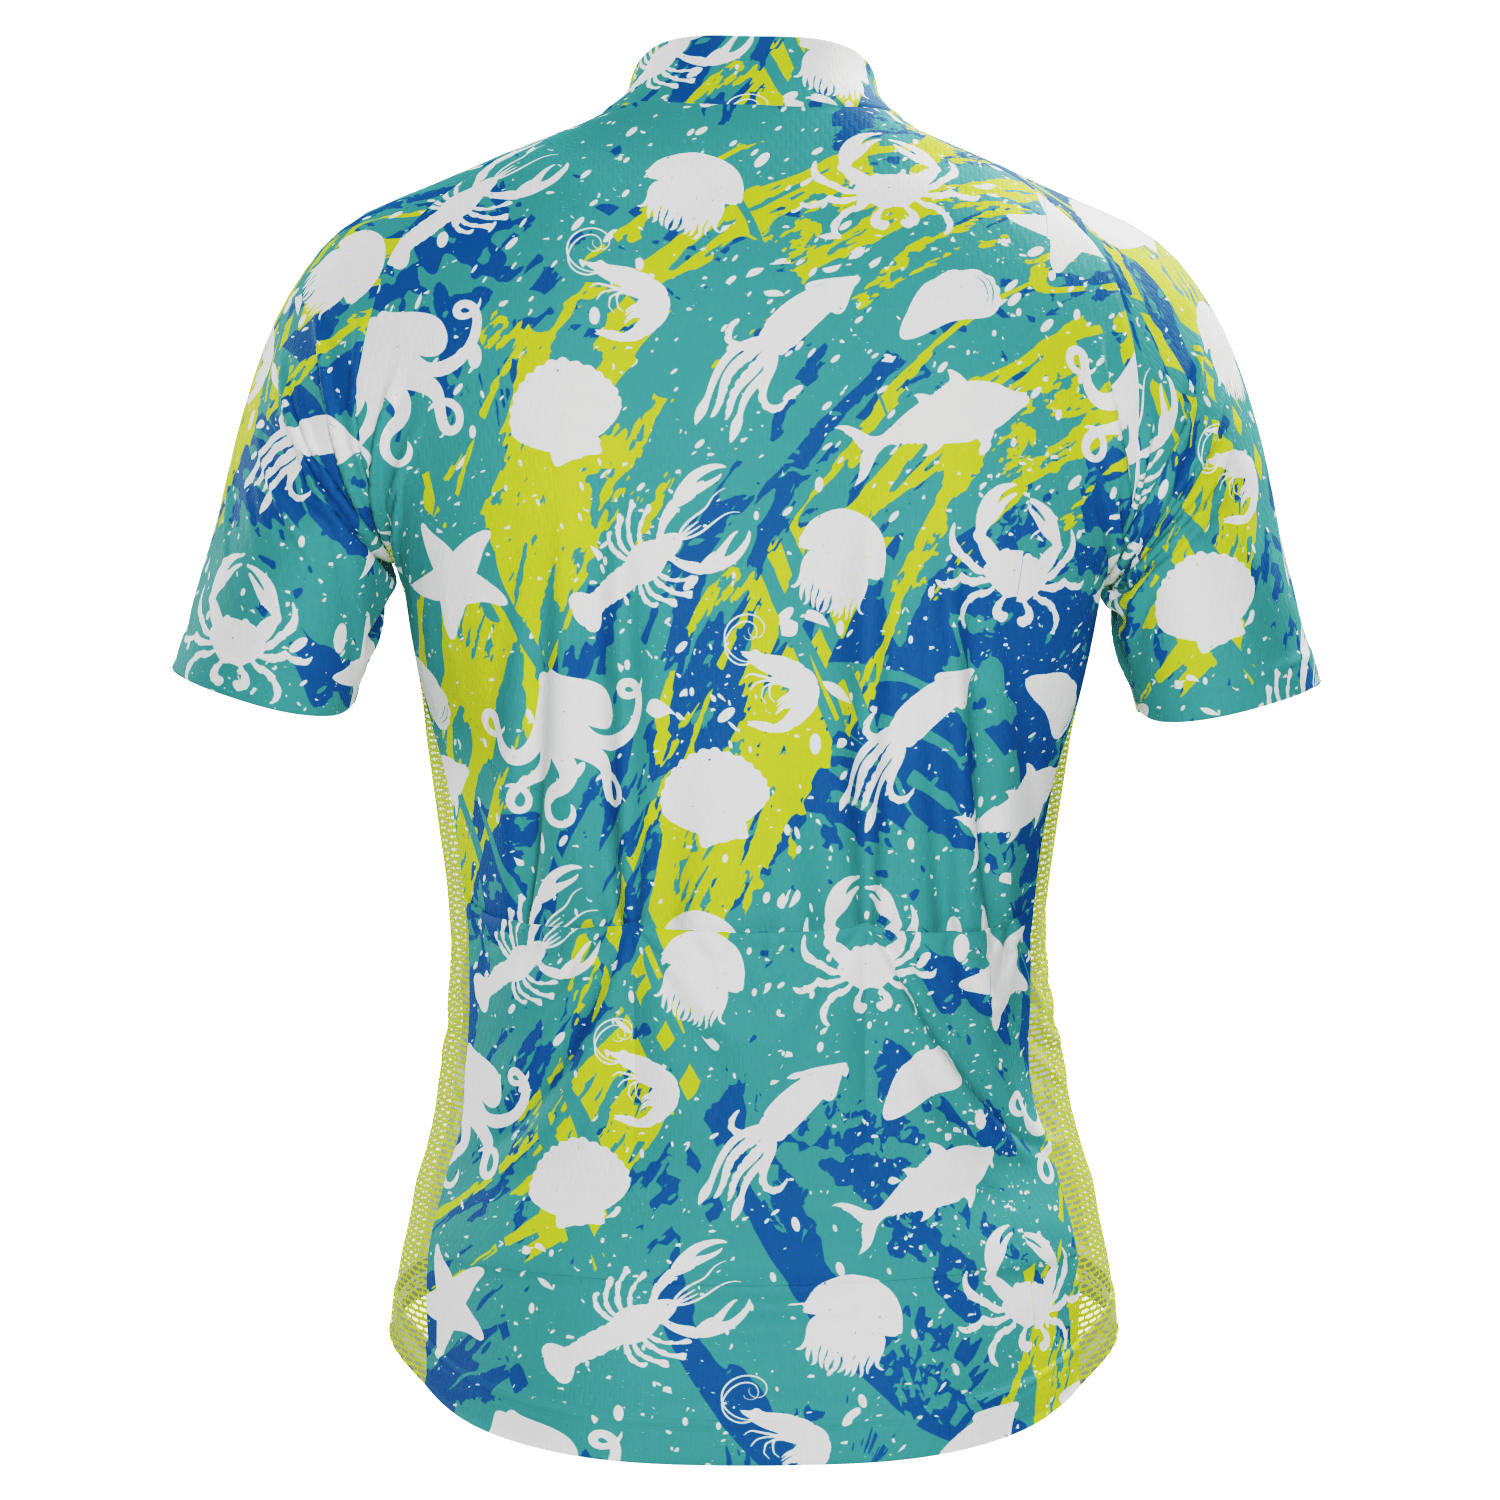 Men's Sea Life Short Sleeve Cycling Jersey